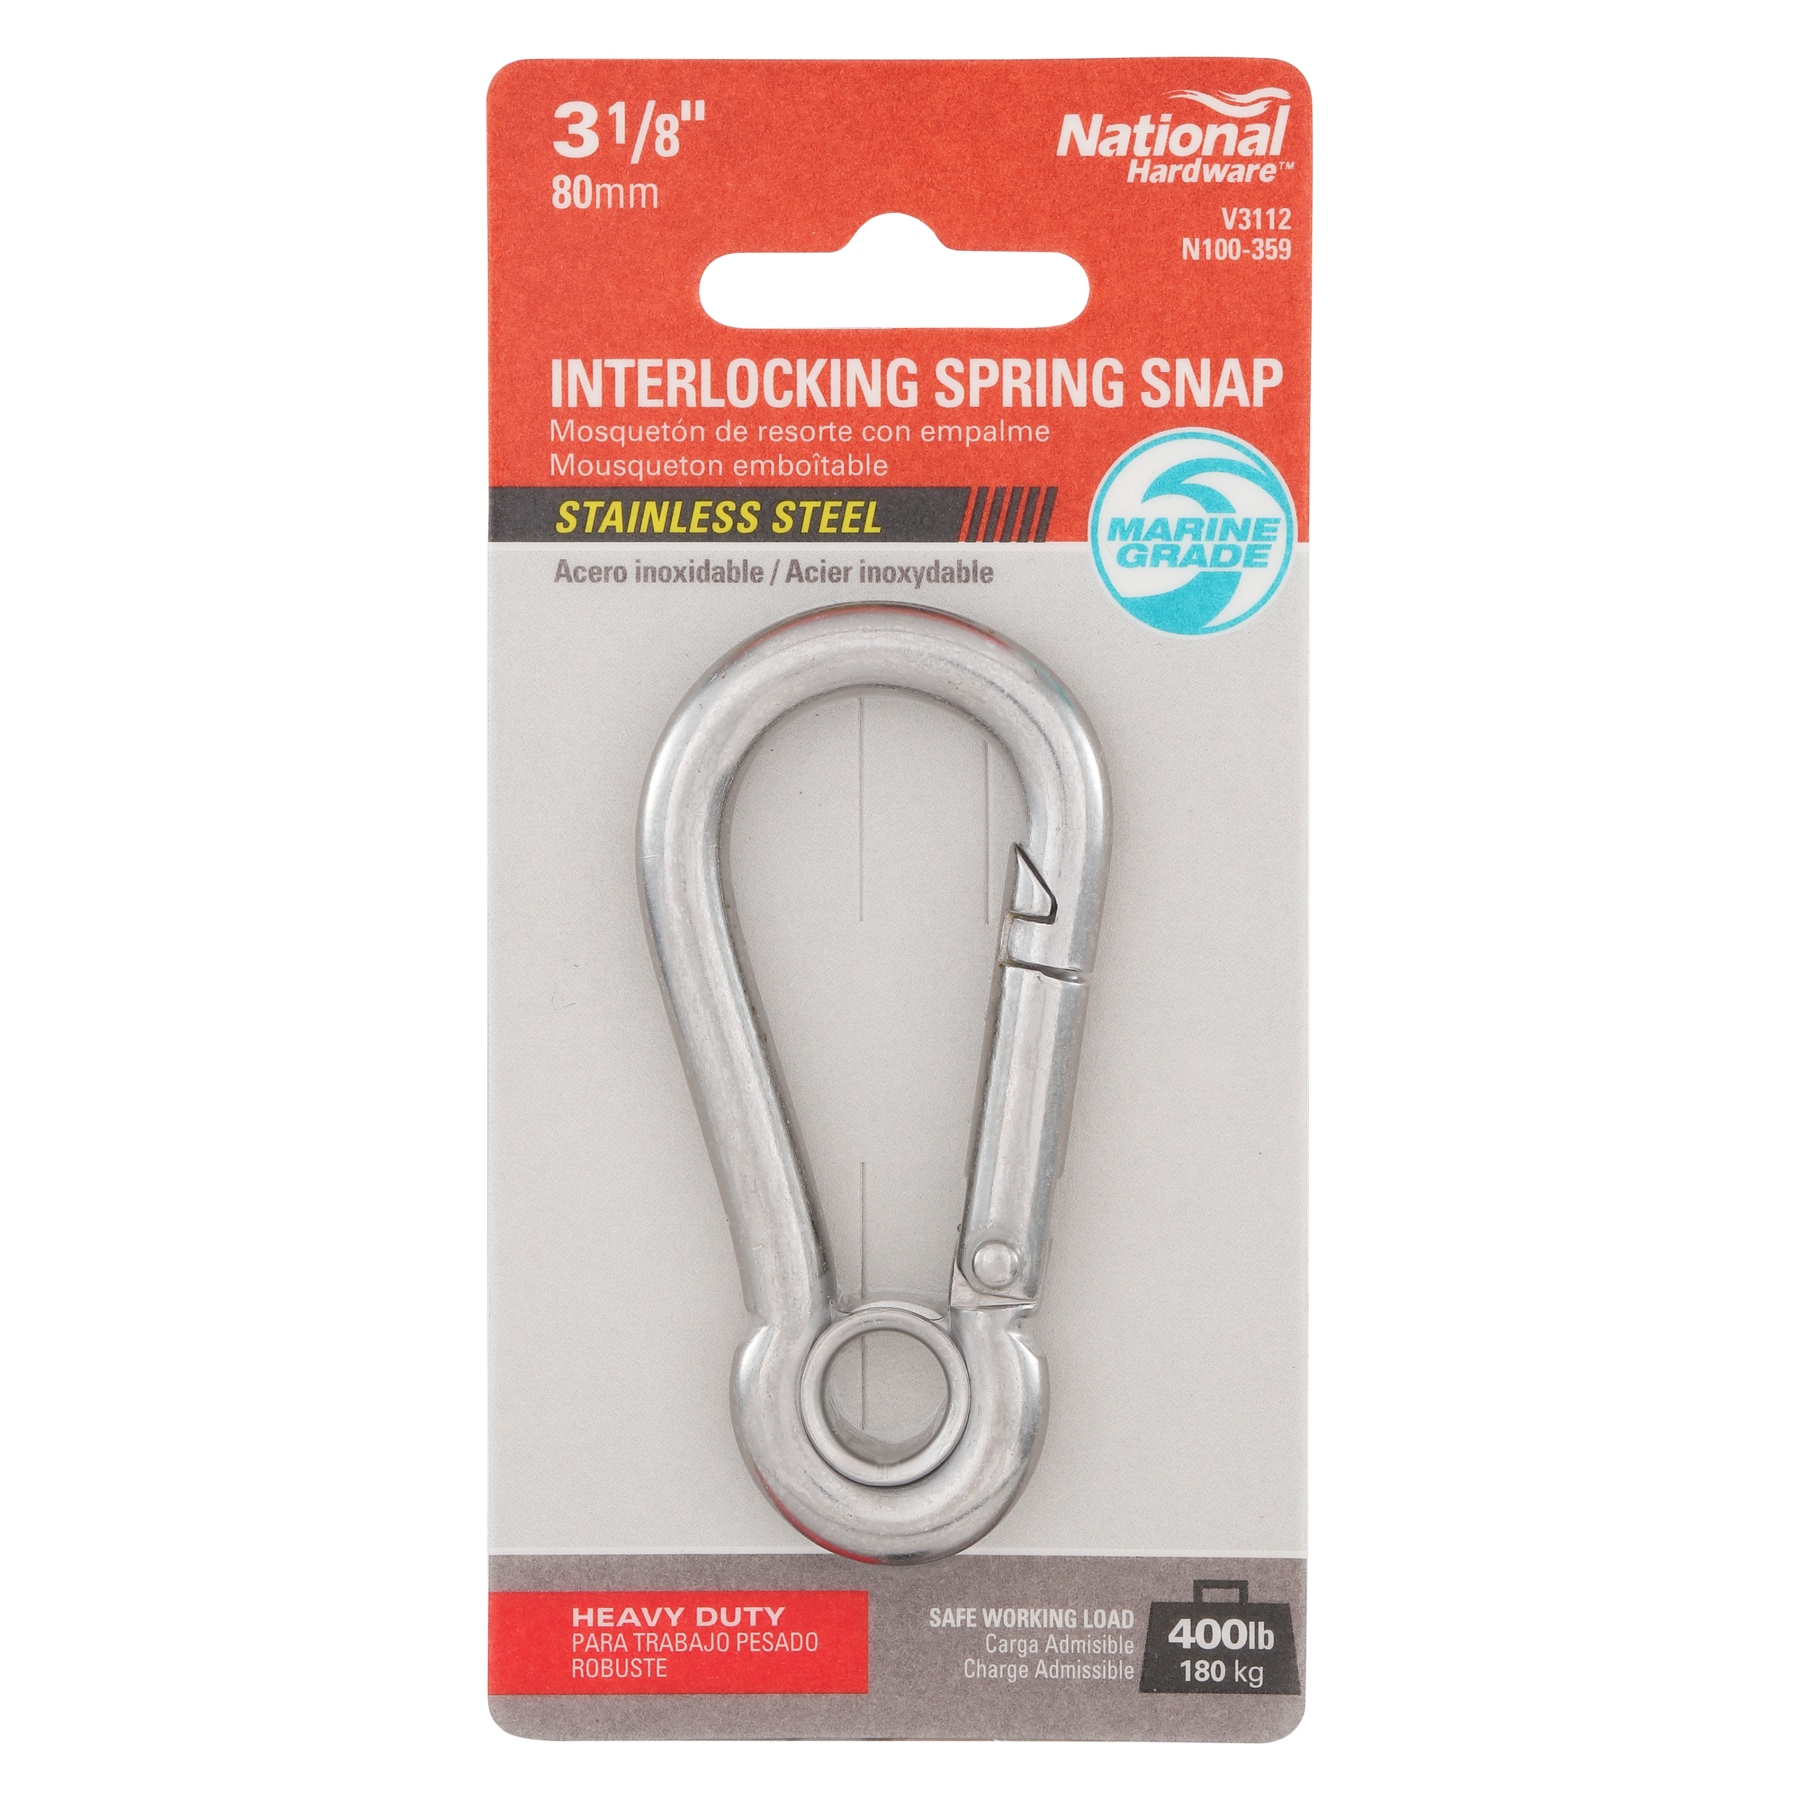 150Pcs Heart-Shaped Swivel Snap Hook Set,Metal Spring Snap